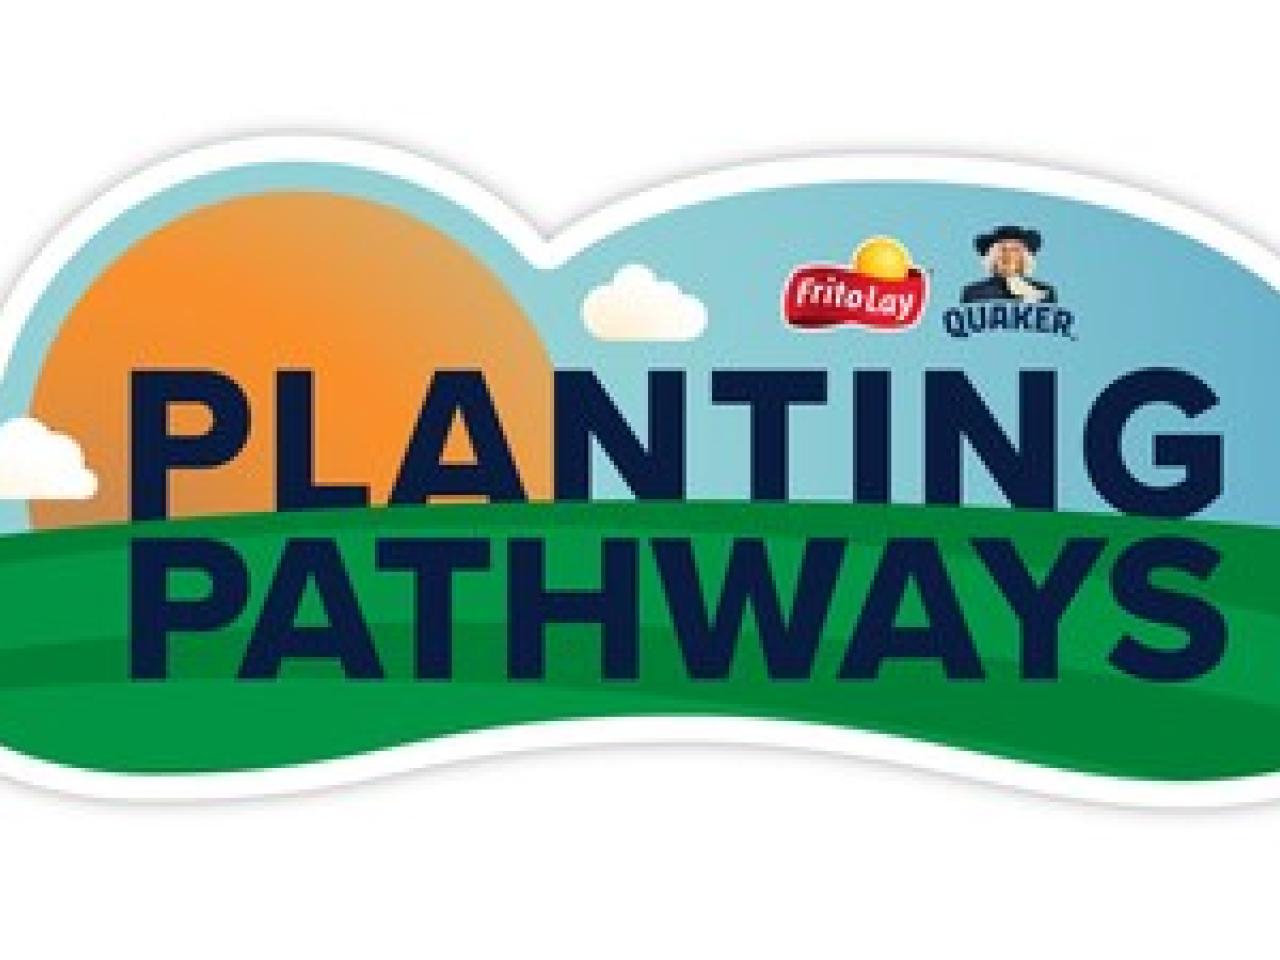 "Planting Pathways" badge.